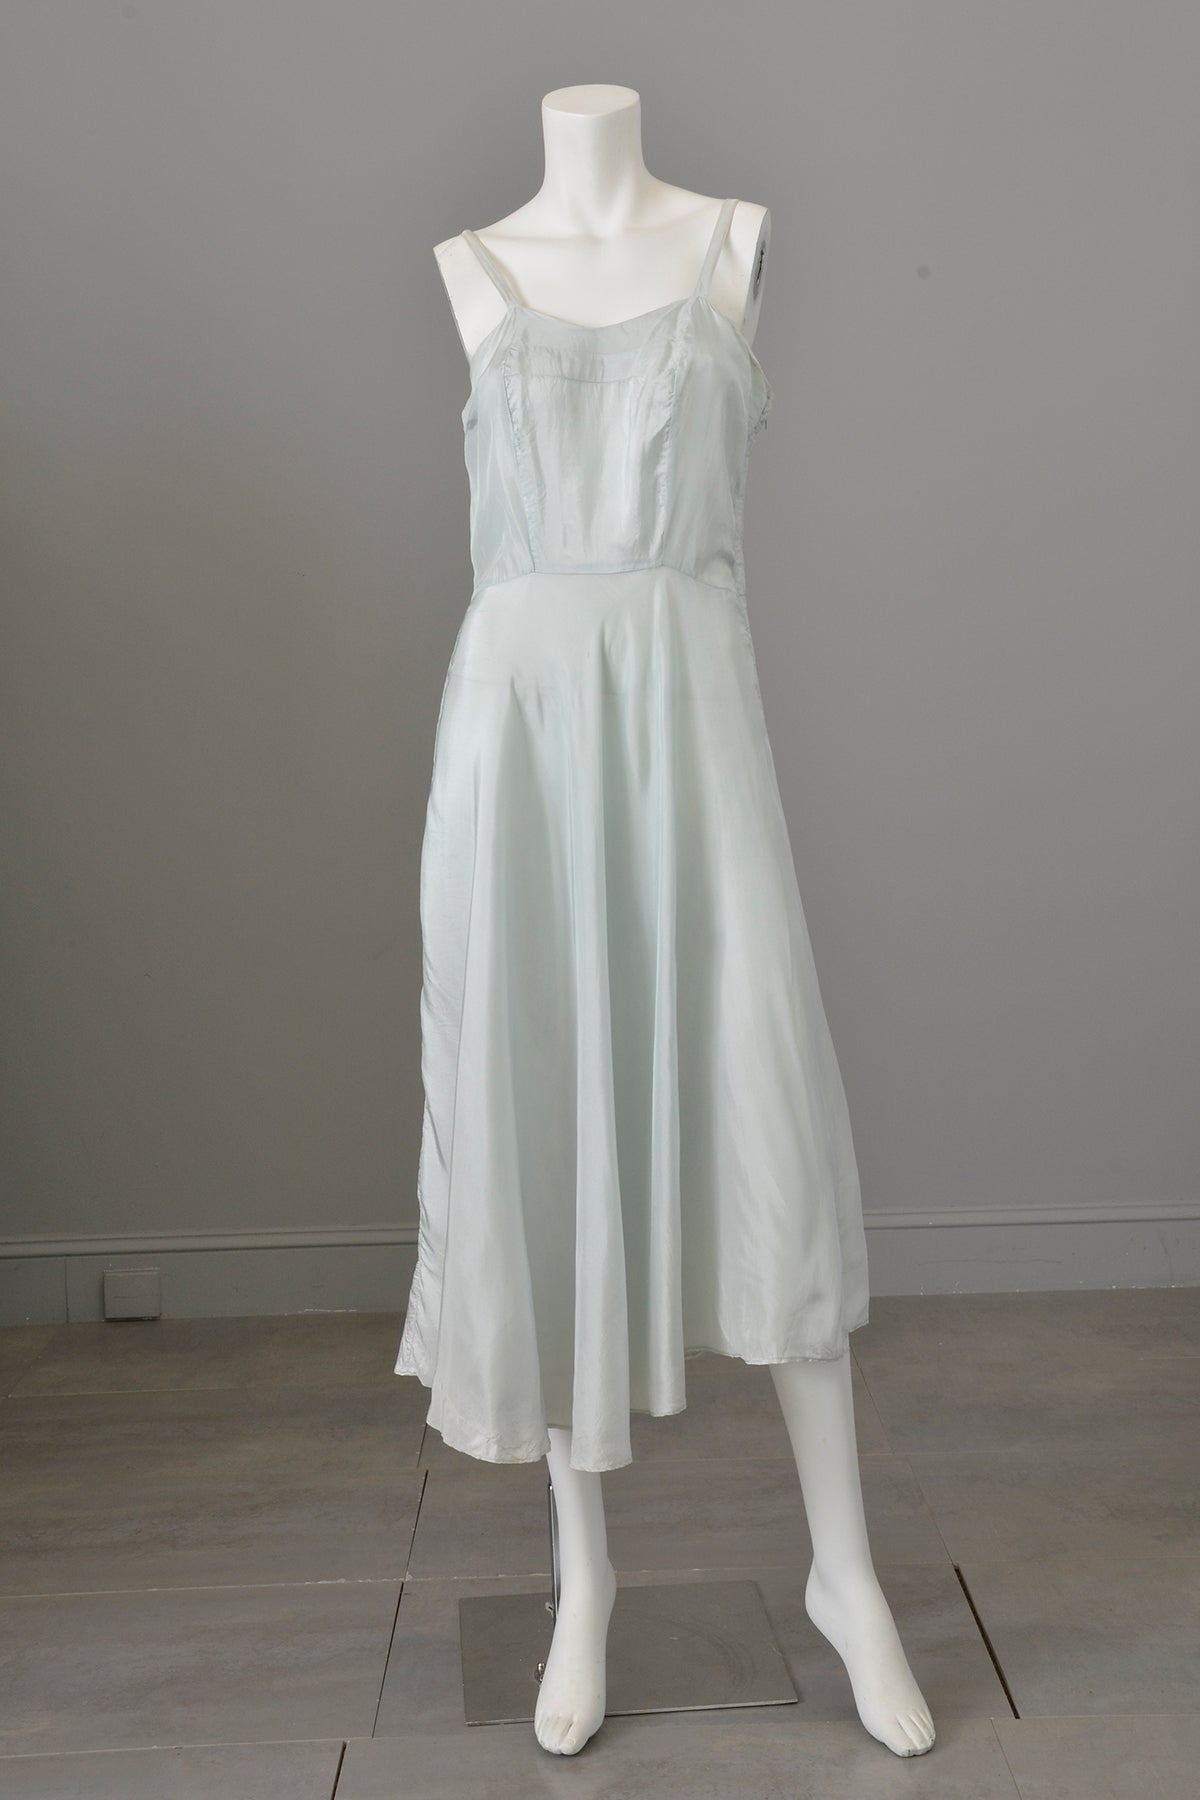 1940s Pale Blue Medallion + Bow Print Puff Sleeve Semi-Sheer Dress and Slip